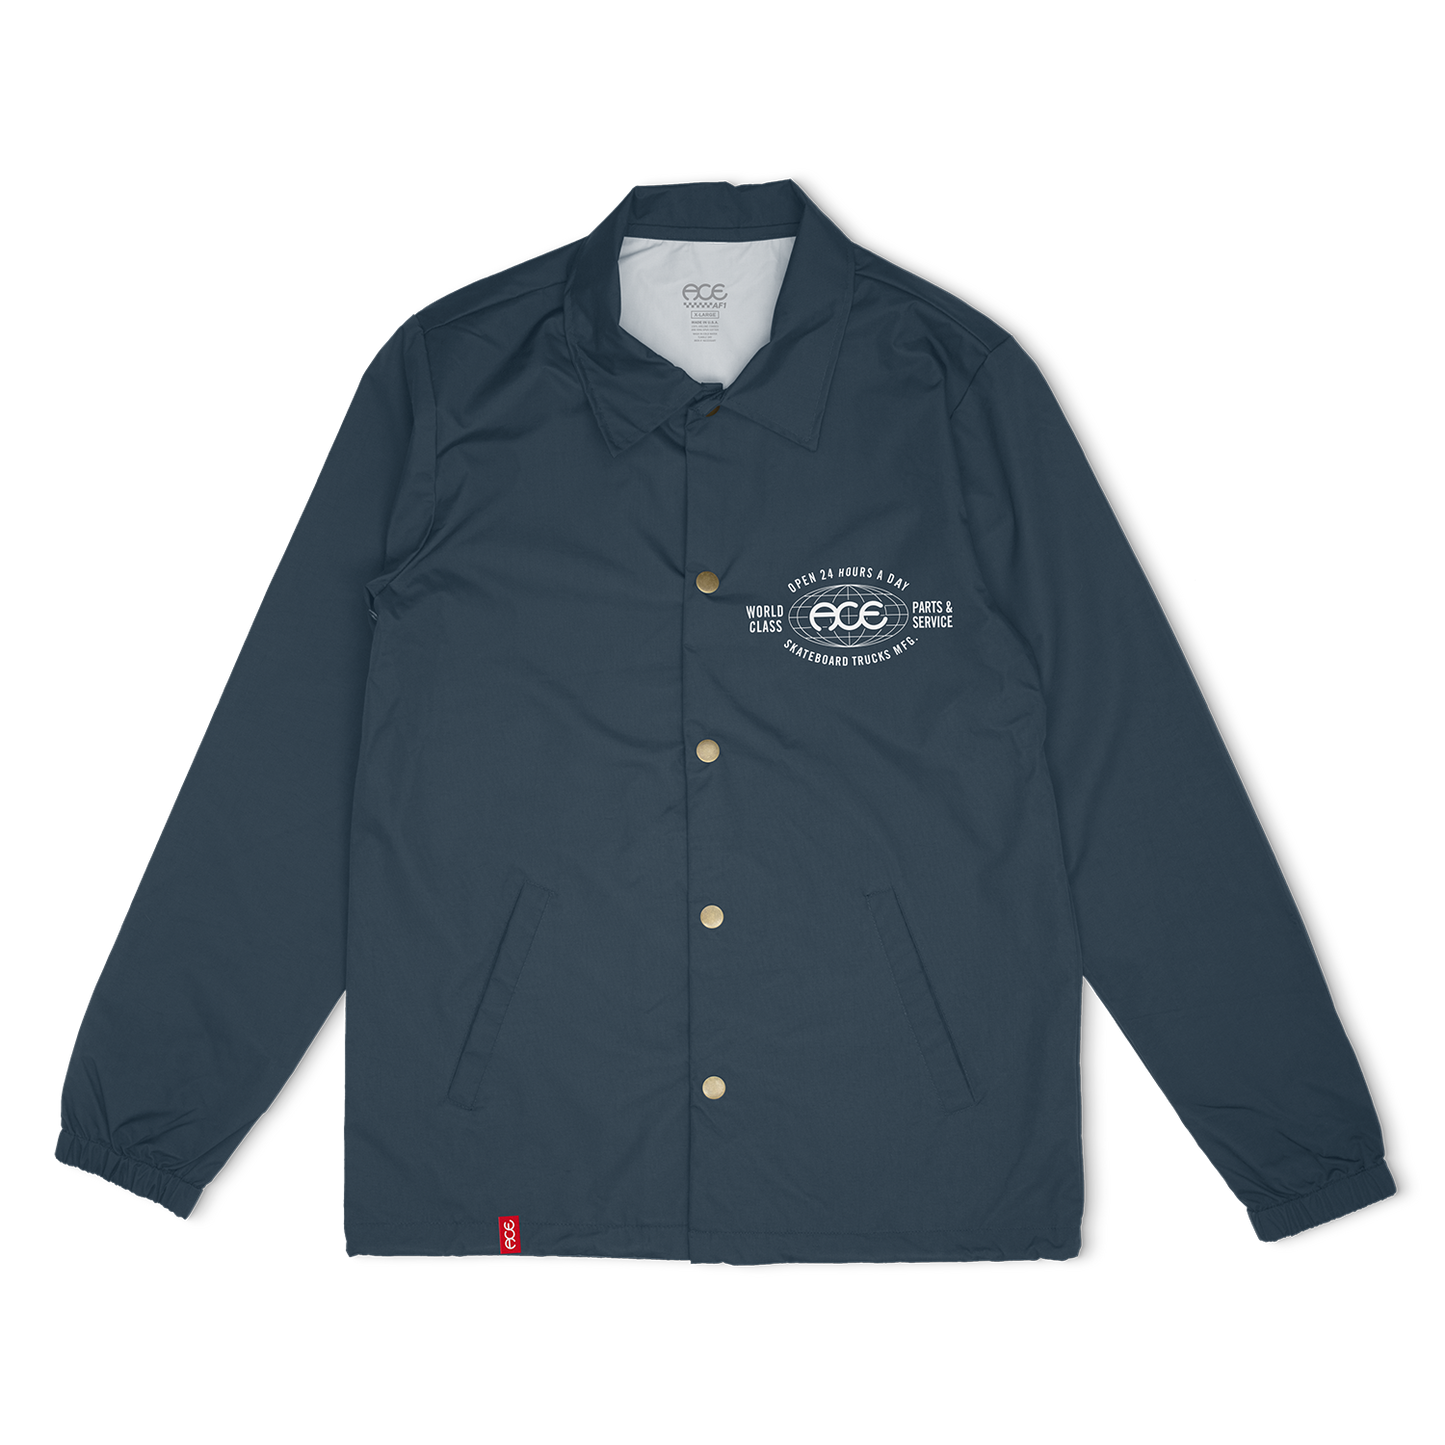 Ace World Class Coaches Jacket